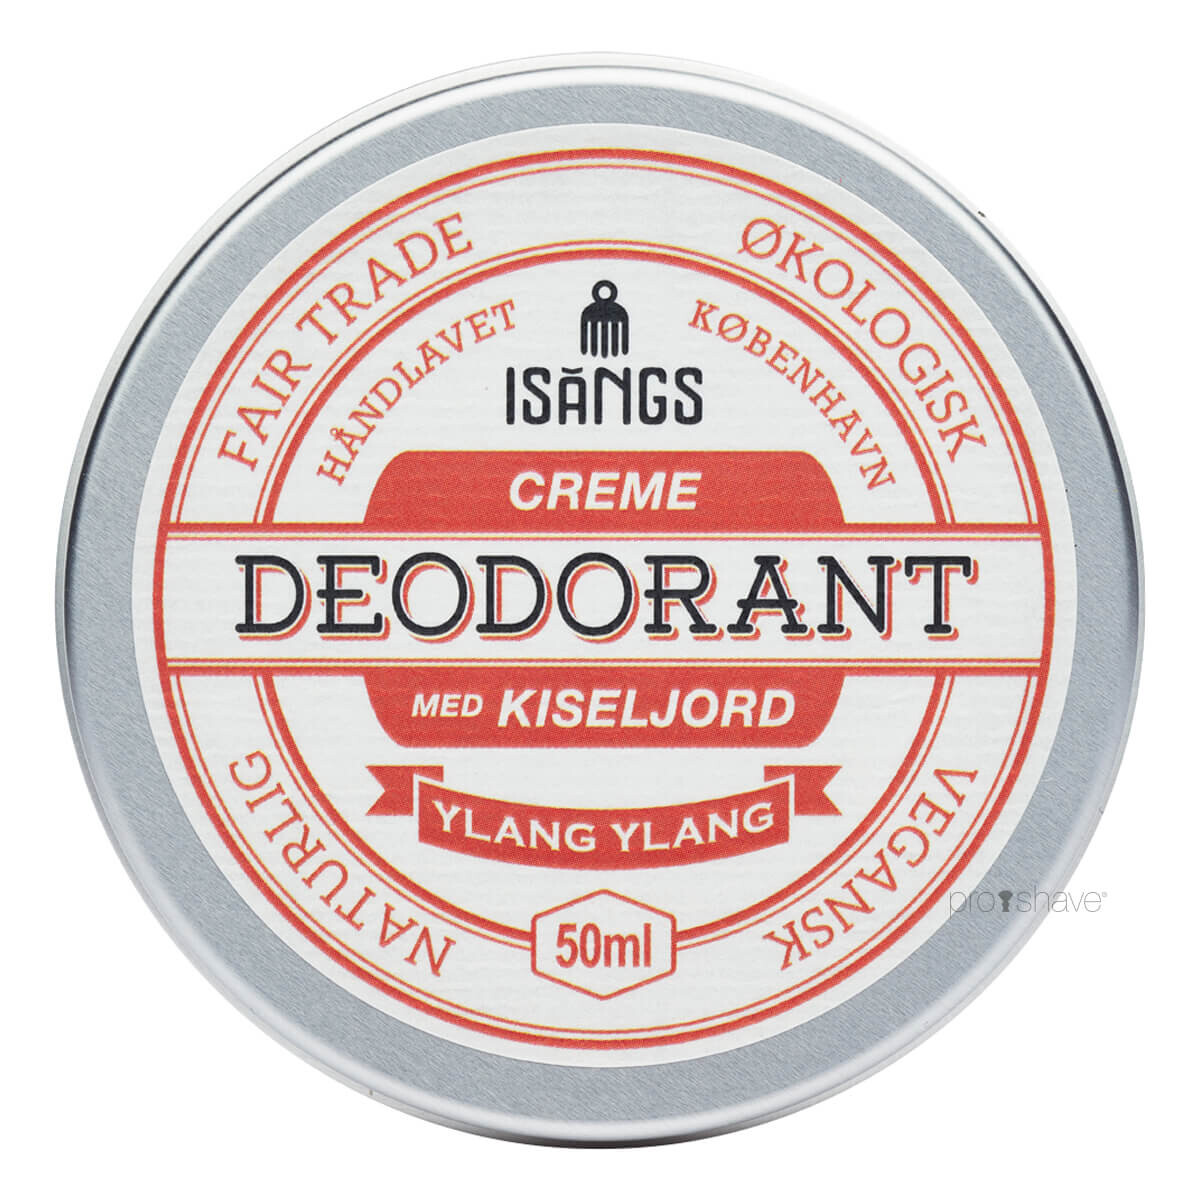 Se Isangs Creme Deodorant med Kiseljord, Ylang Ylang, 50 ml. hos Proshave